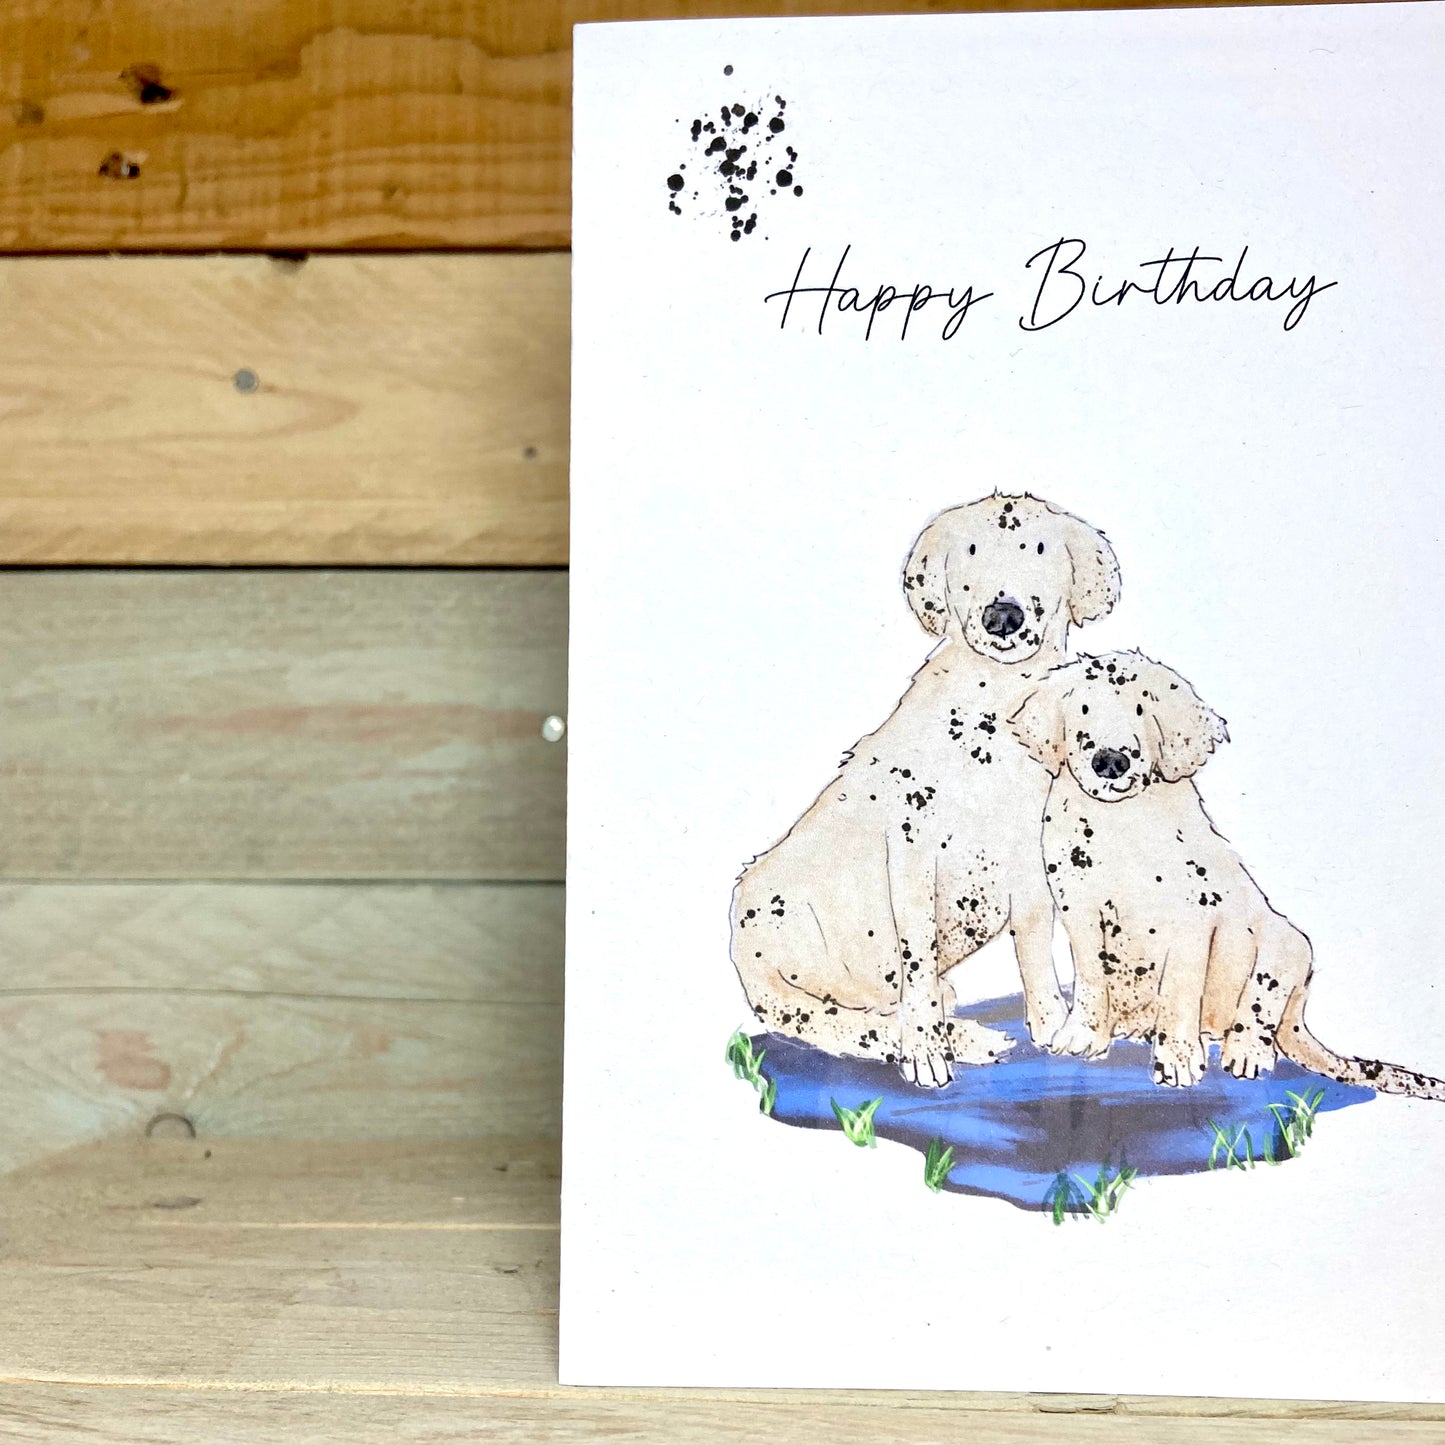 Muddy Puddle Birthday Card